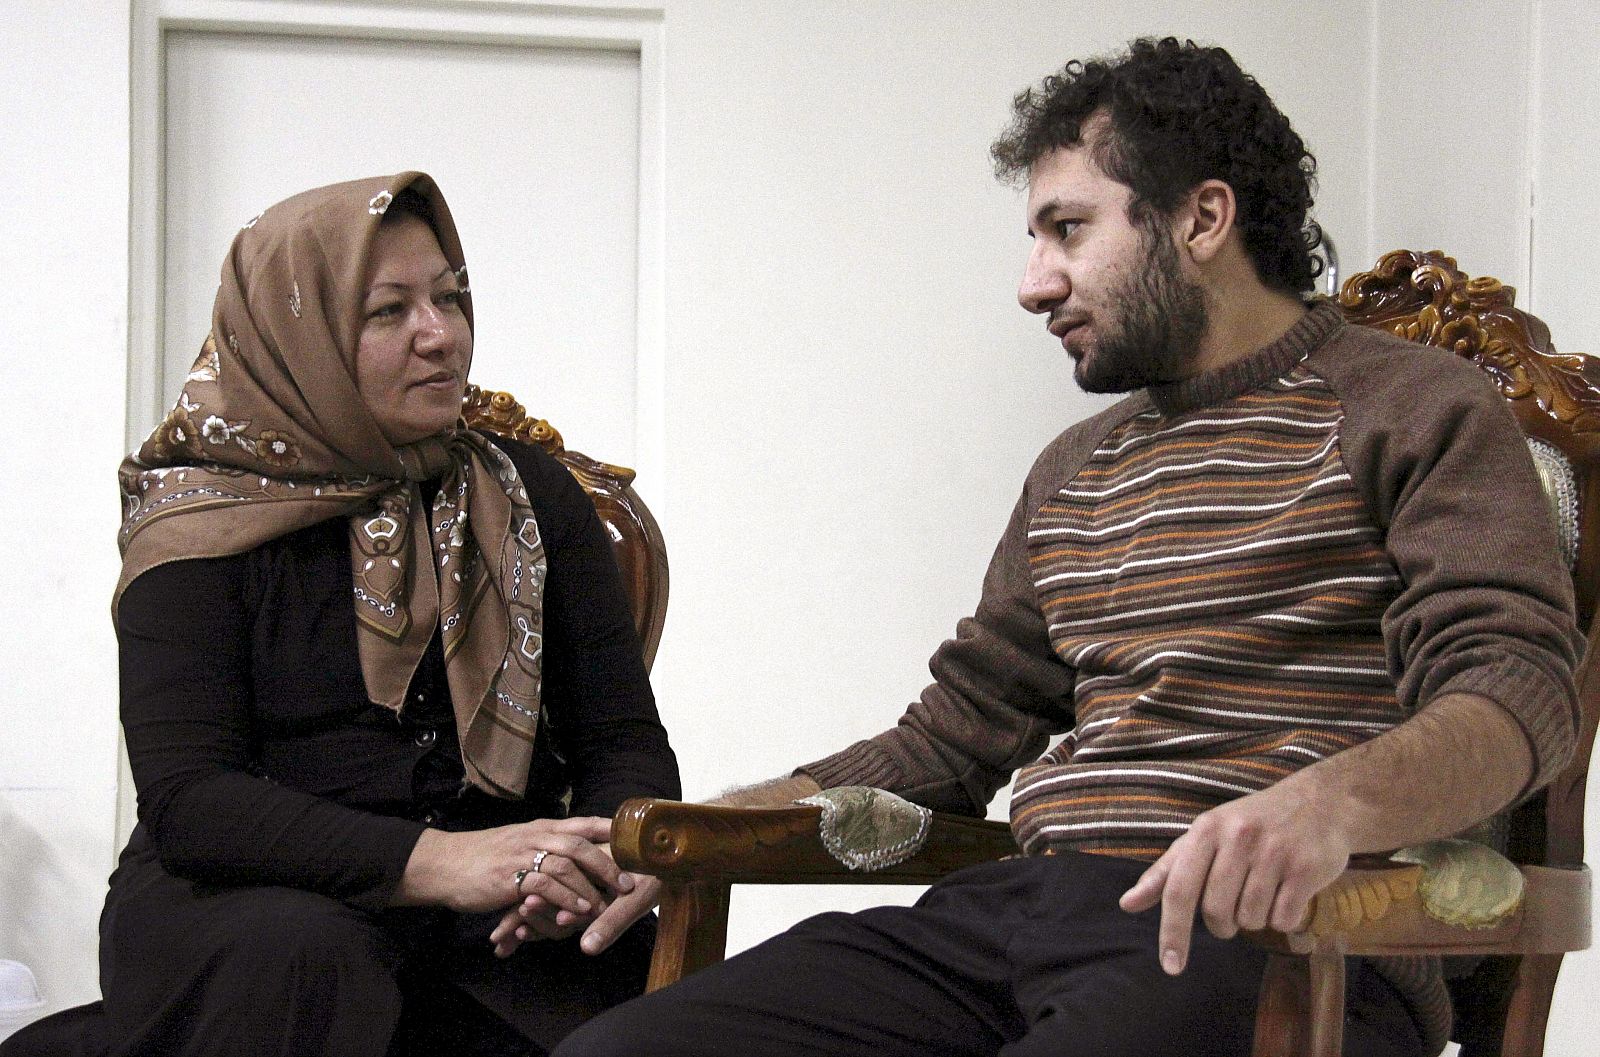 Imagen cedida por la cadena iraní Press TV de Sakineh Mohammadi Ashtiani tomada el 4 de diciembre de 2010